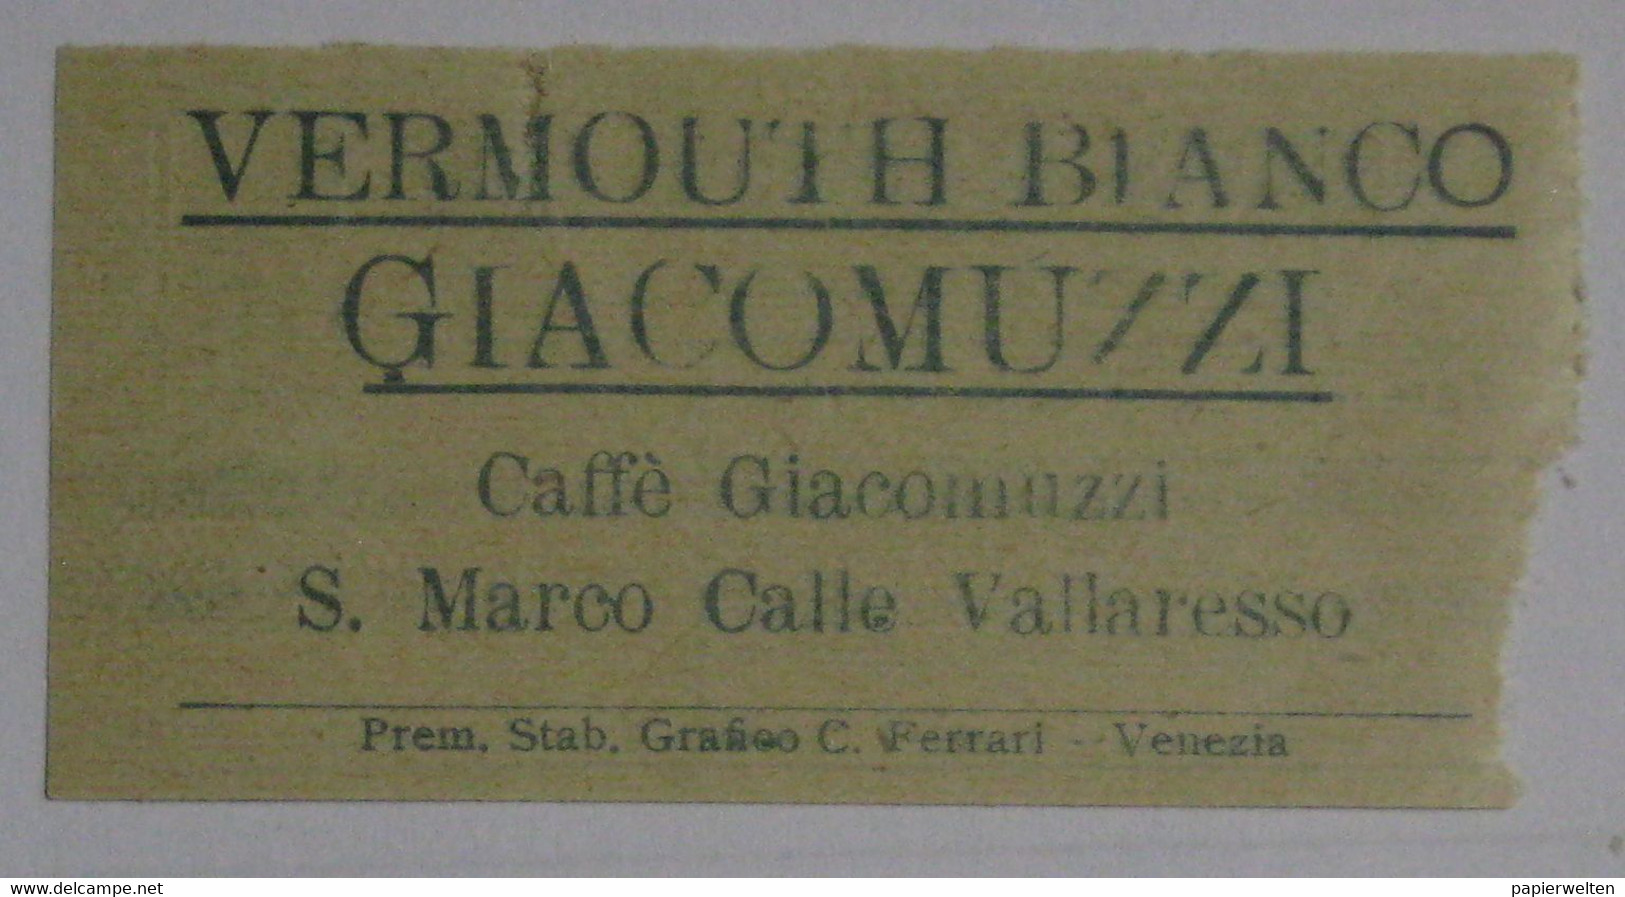 Lido Di Venezia - Tramvia Elettrica Lido C.I.G.A / Vermouth Bianco Giacomuzzi Caffe Giacomuzzi S. Marco Calle Vallaresso - Europe